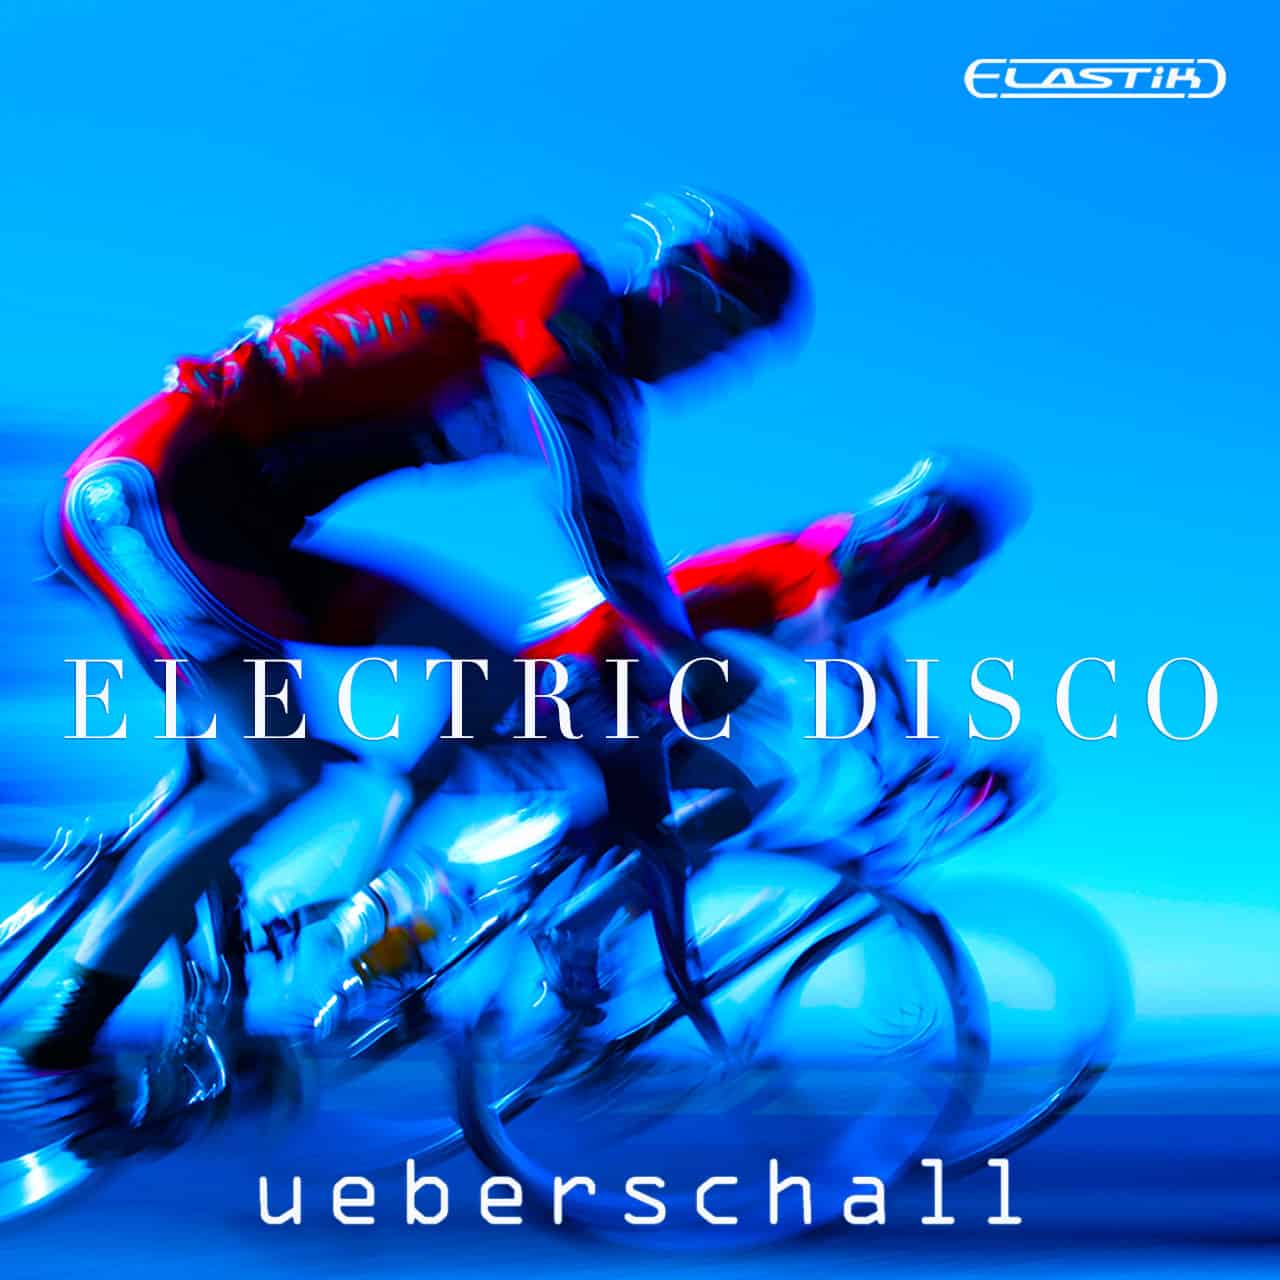 Electric Disco ueberschall 1280x1280 1